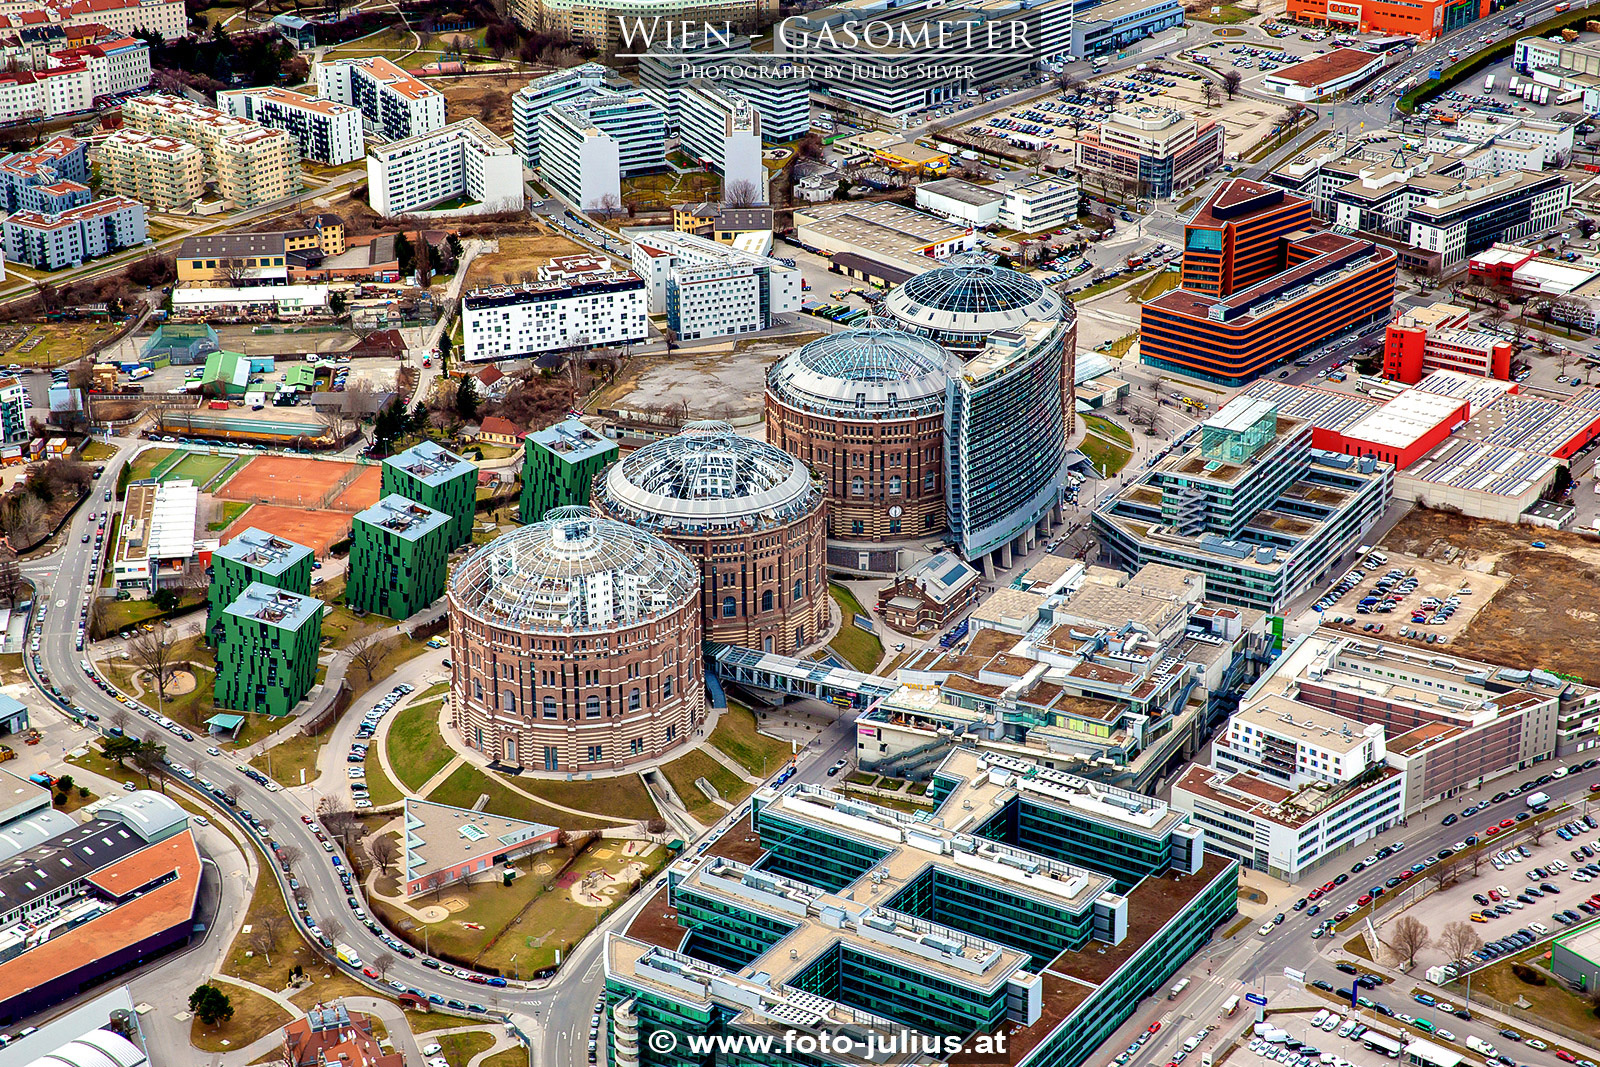 W6340a_Wien_Gasometer_Aerial_Photo.jpg, 1,2MB